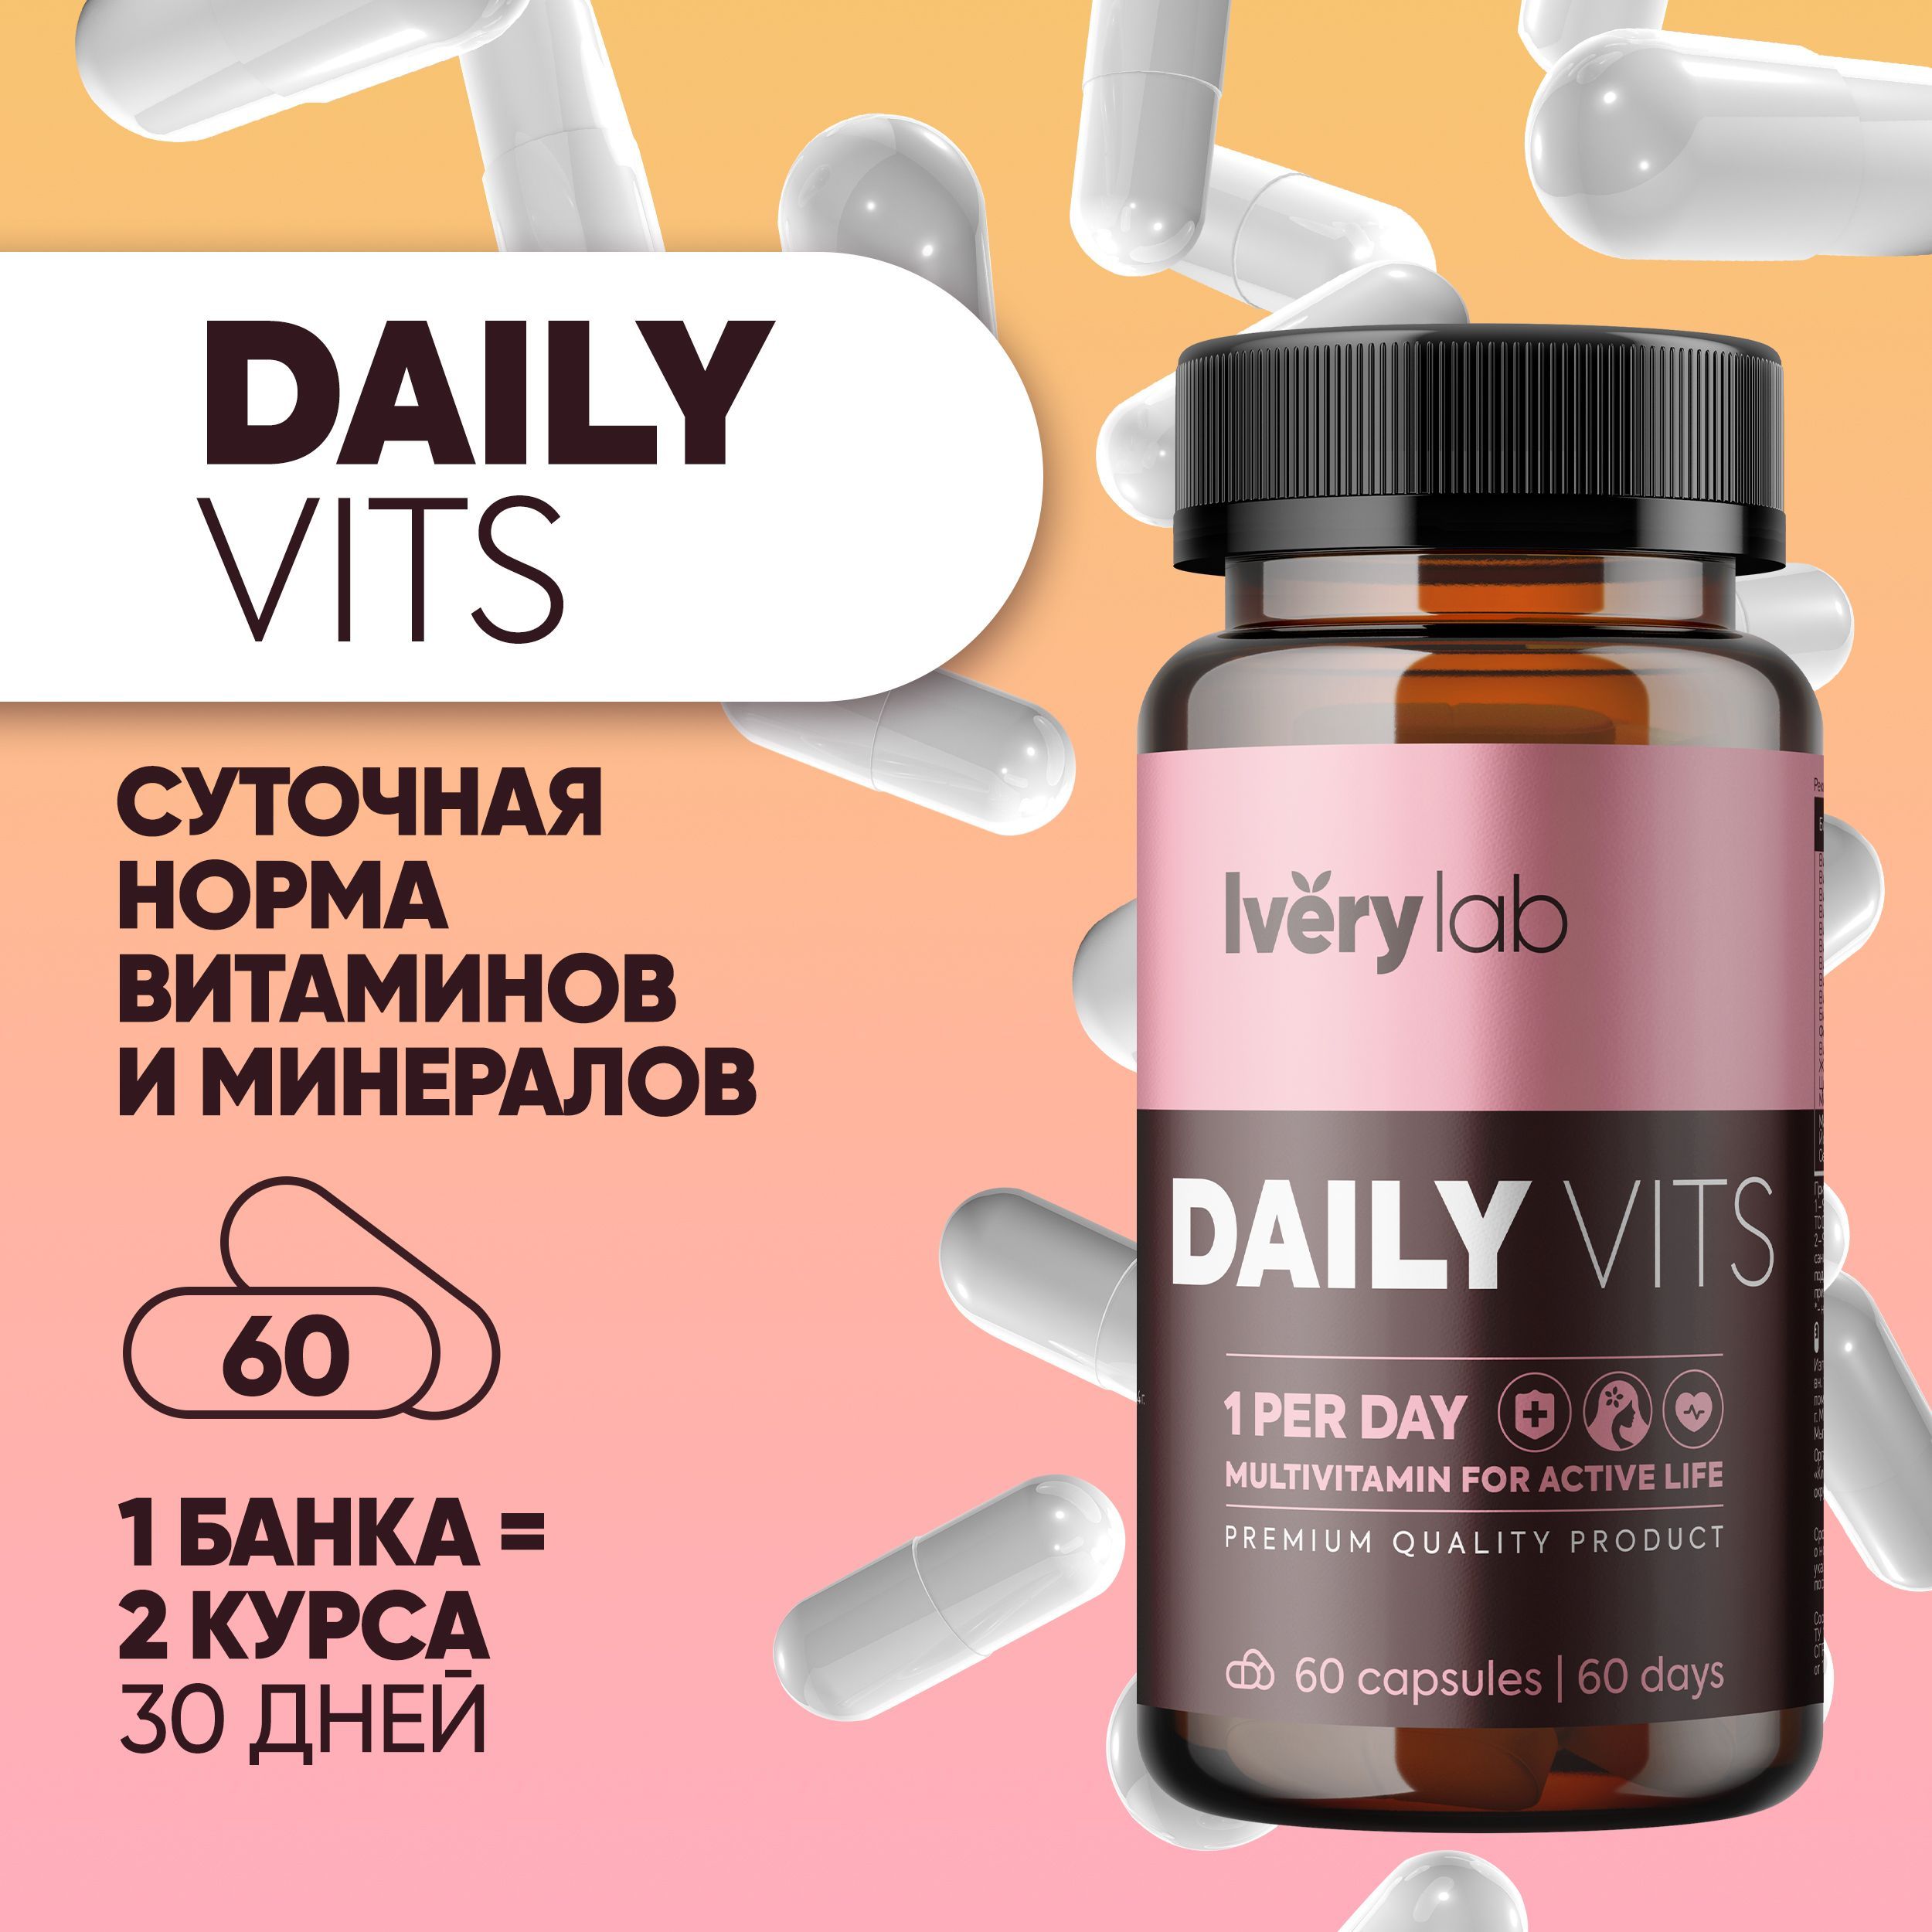 Daily Vits витамины. Daily Vit мужчины. Витамины Now Daily Vits отзывы. Холегон цена. Комплекс дейли